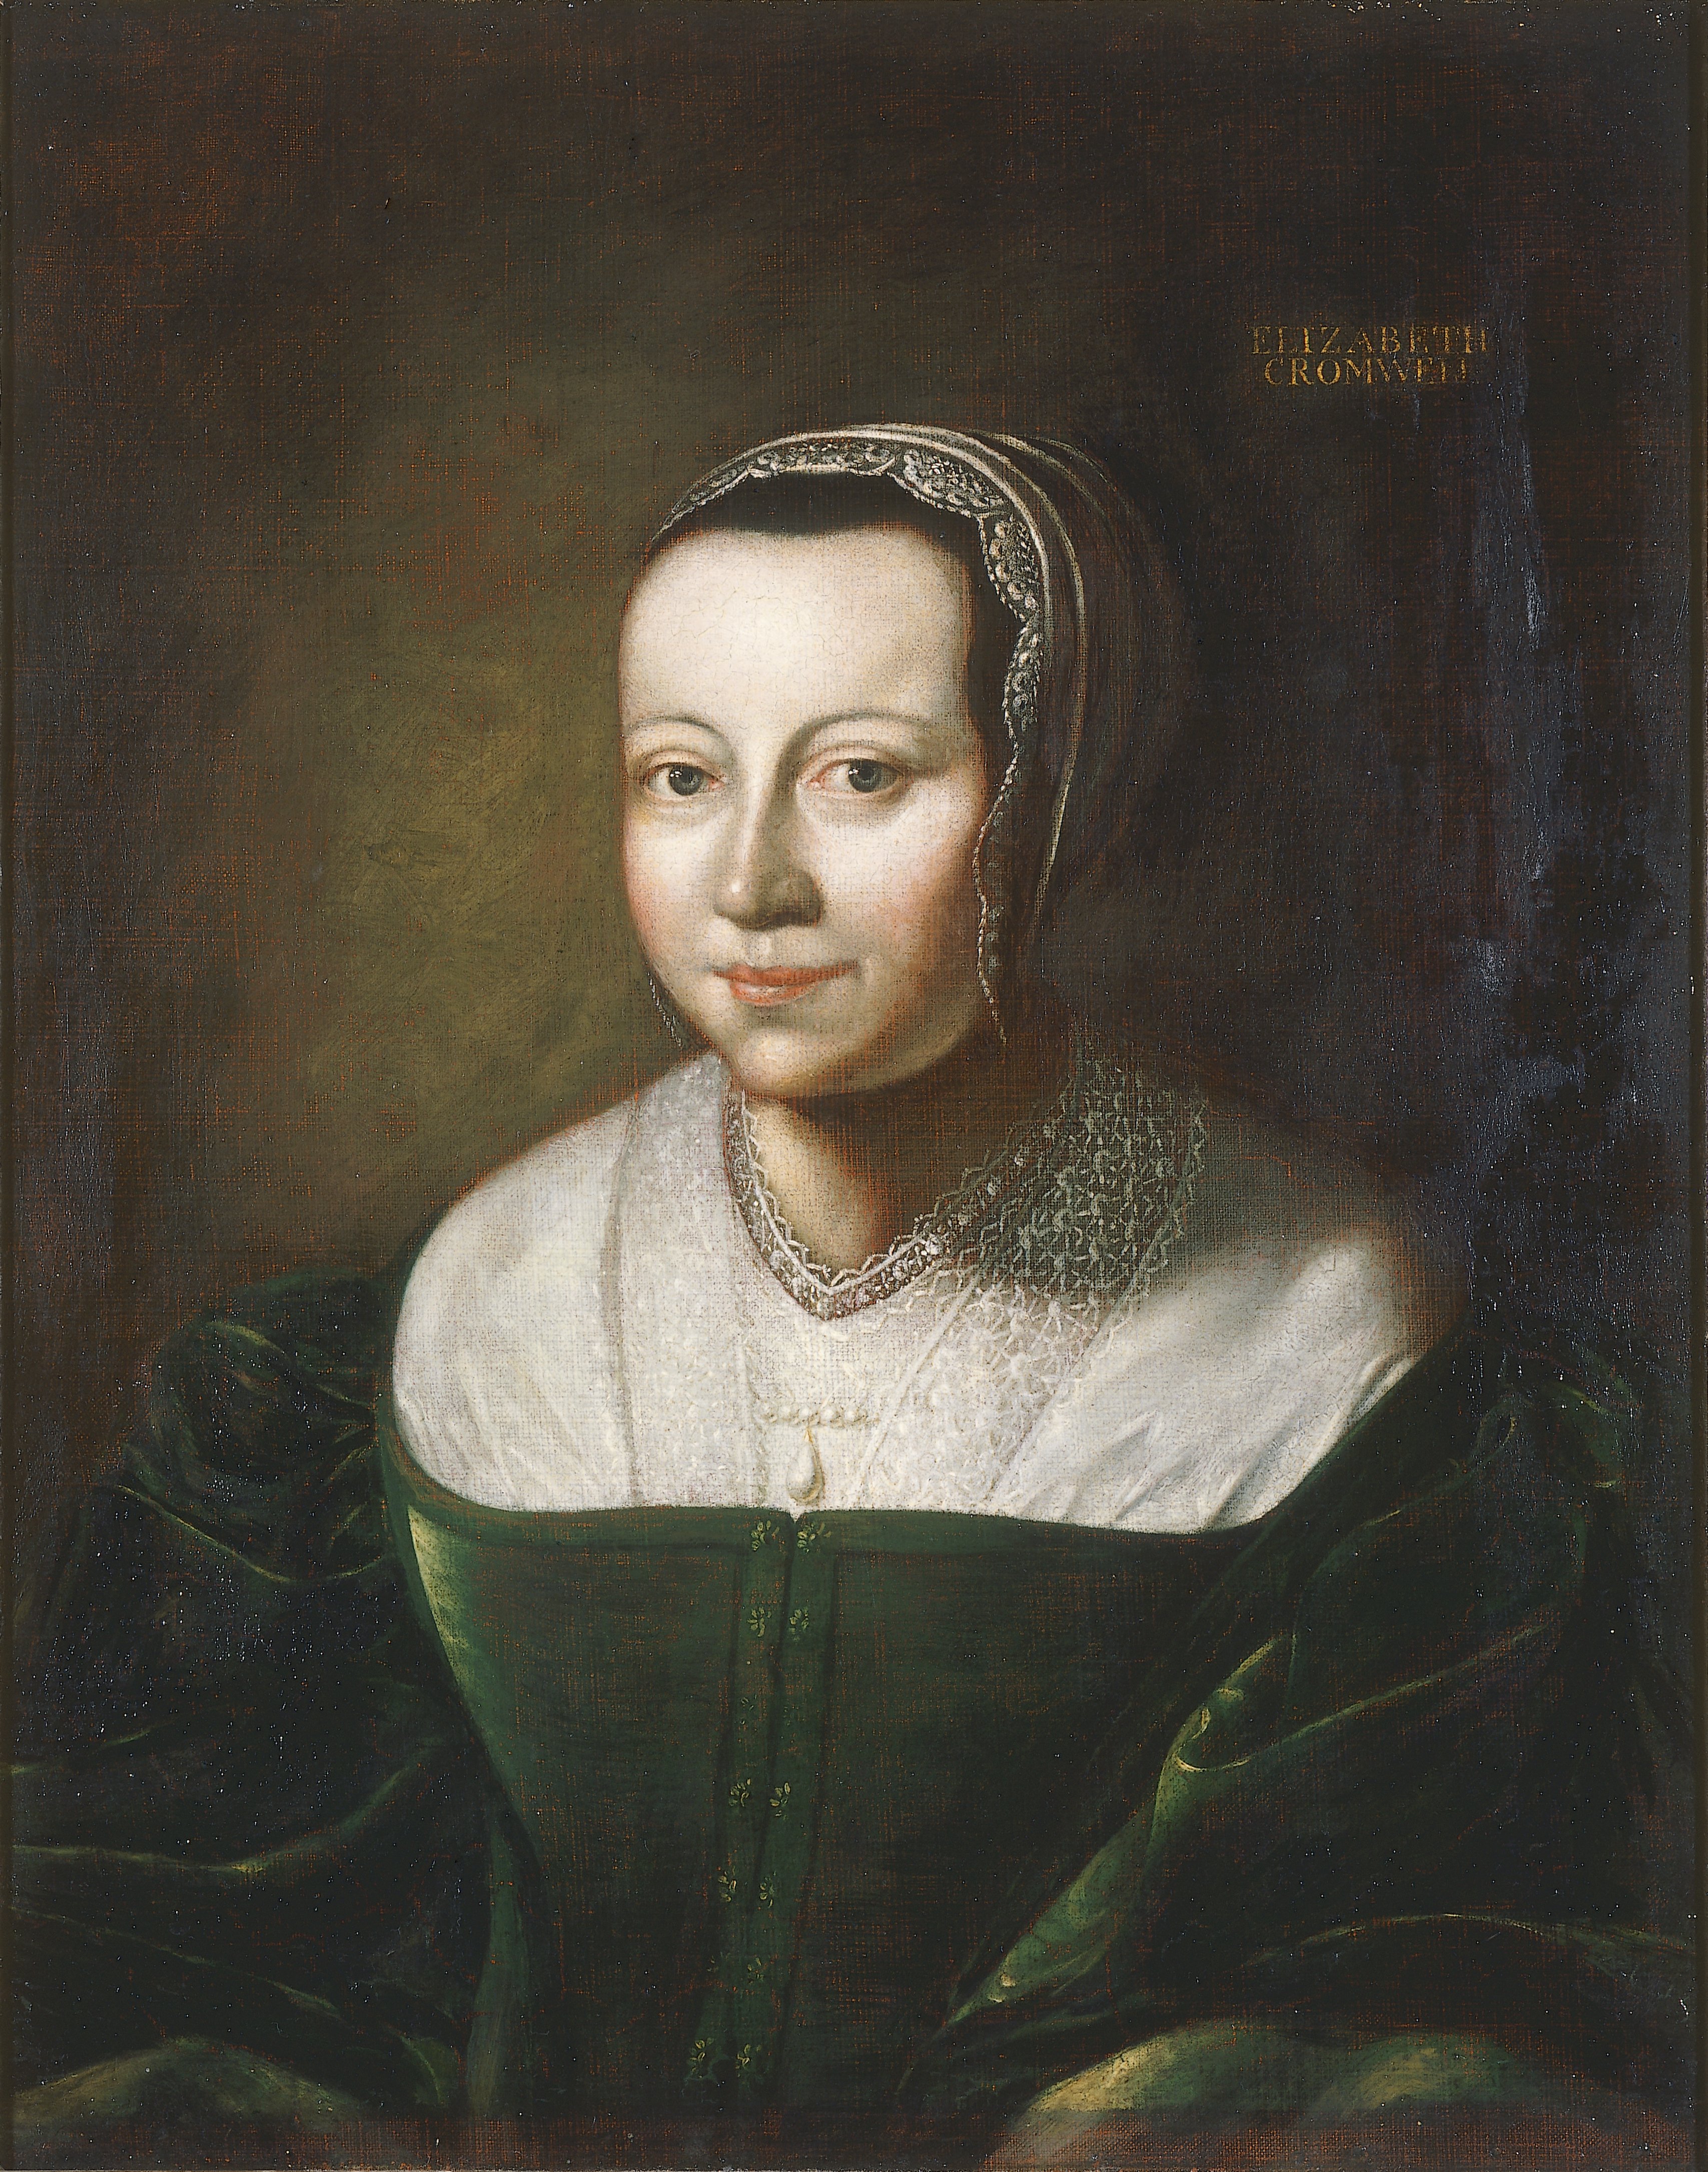 Portrait of Elizabeth Cromwell, English School, late 1600s, Oil on Canvas. thumbnail